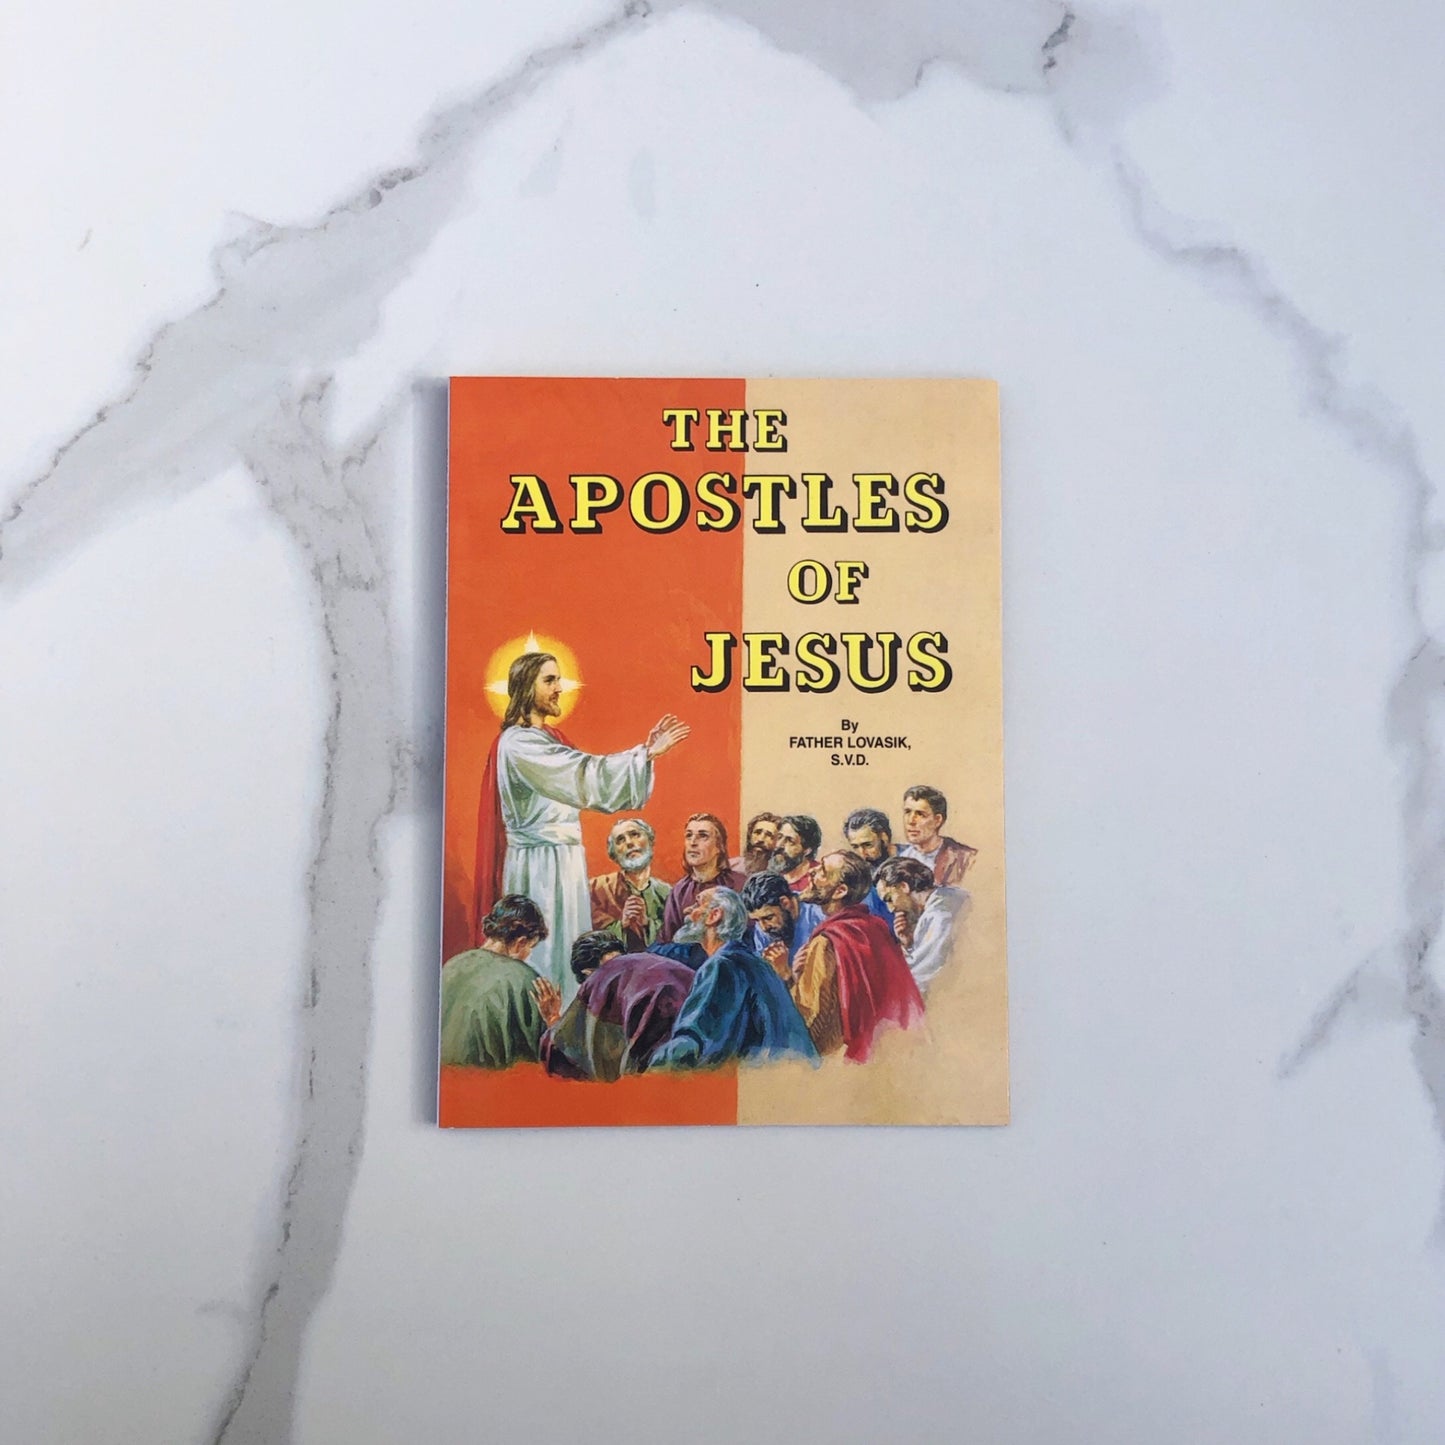 The Apostles of Jesus